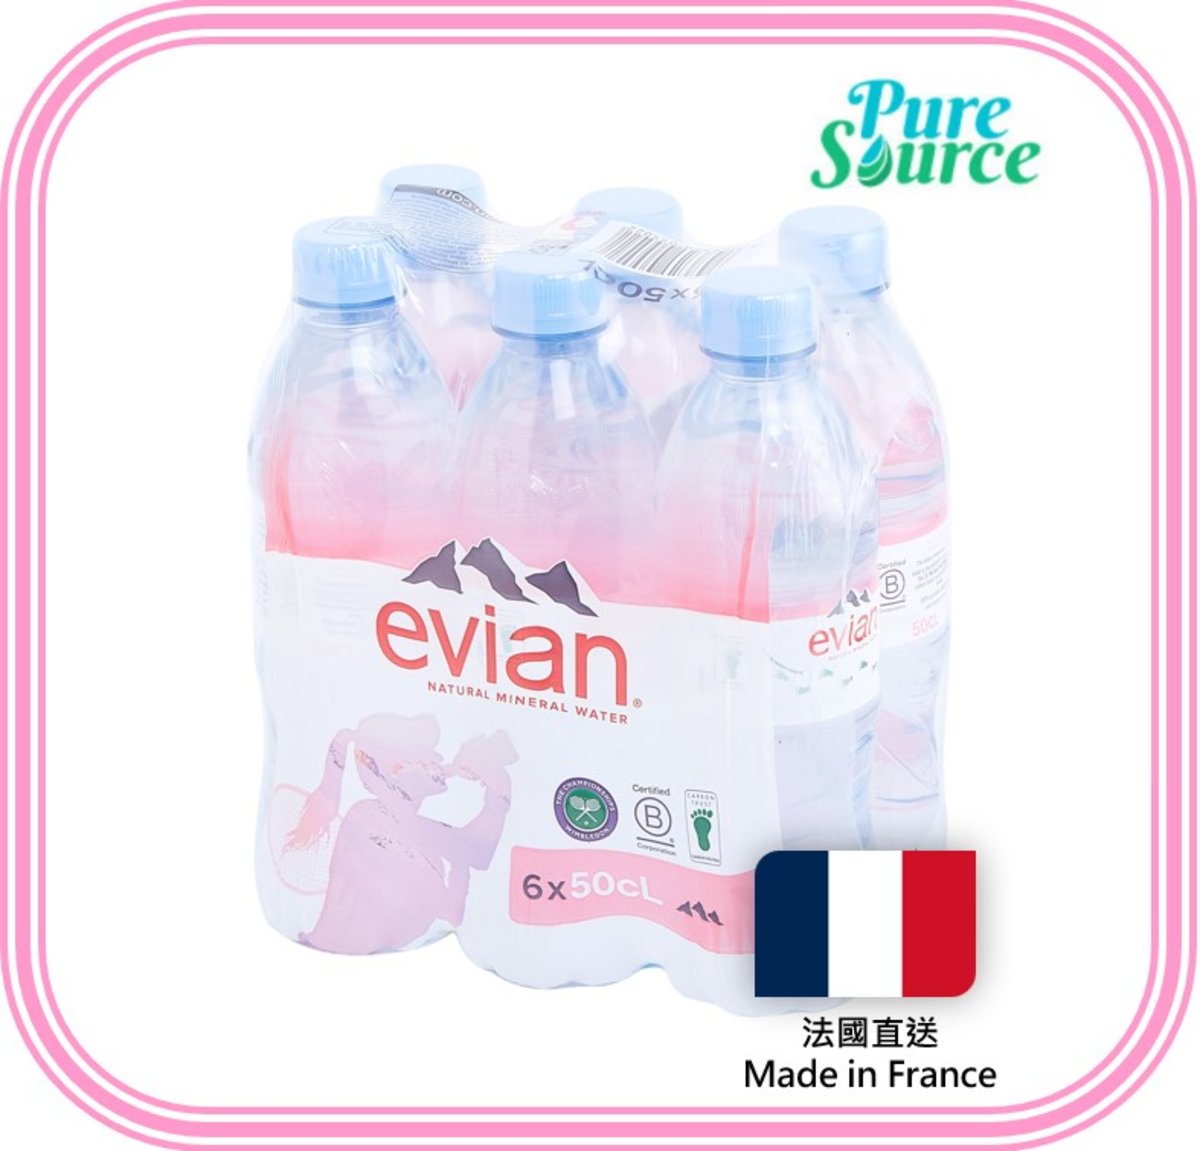 Evian 法國天然礦泉水 500ml x 6支裝- Evian 伊雲 #因應不同批次, 包裝或會有機會印有"PURE"字樣